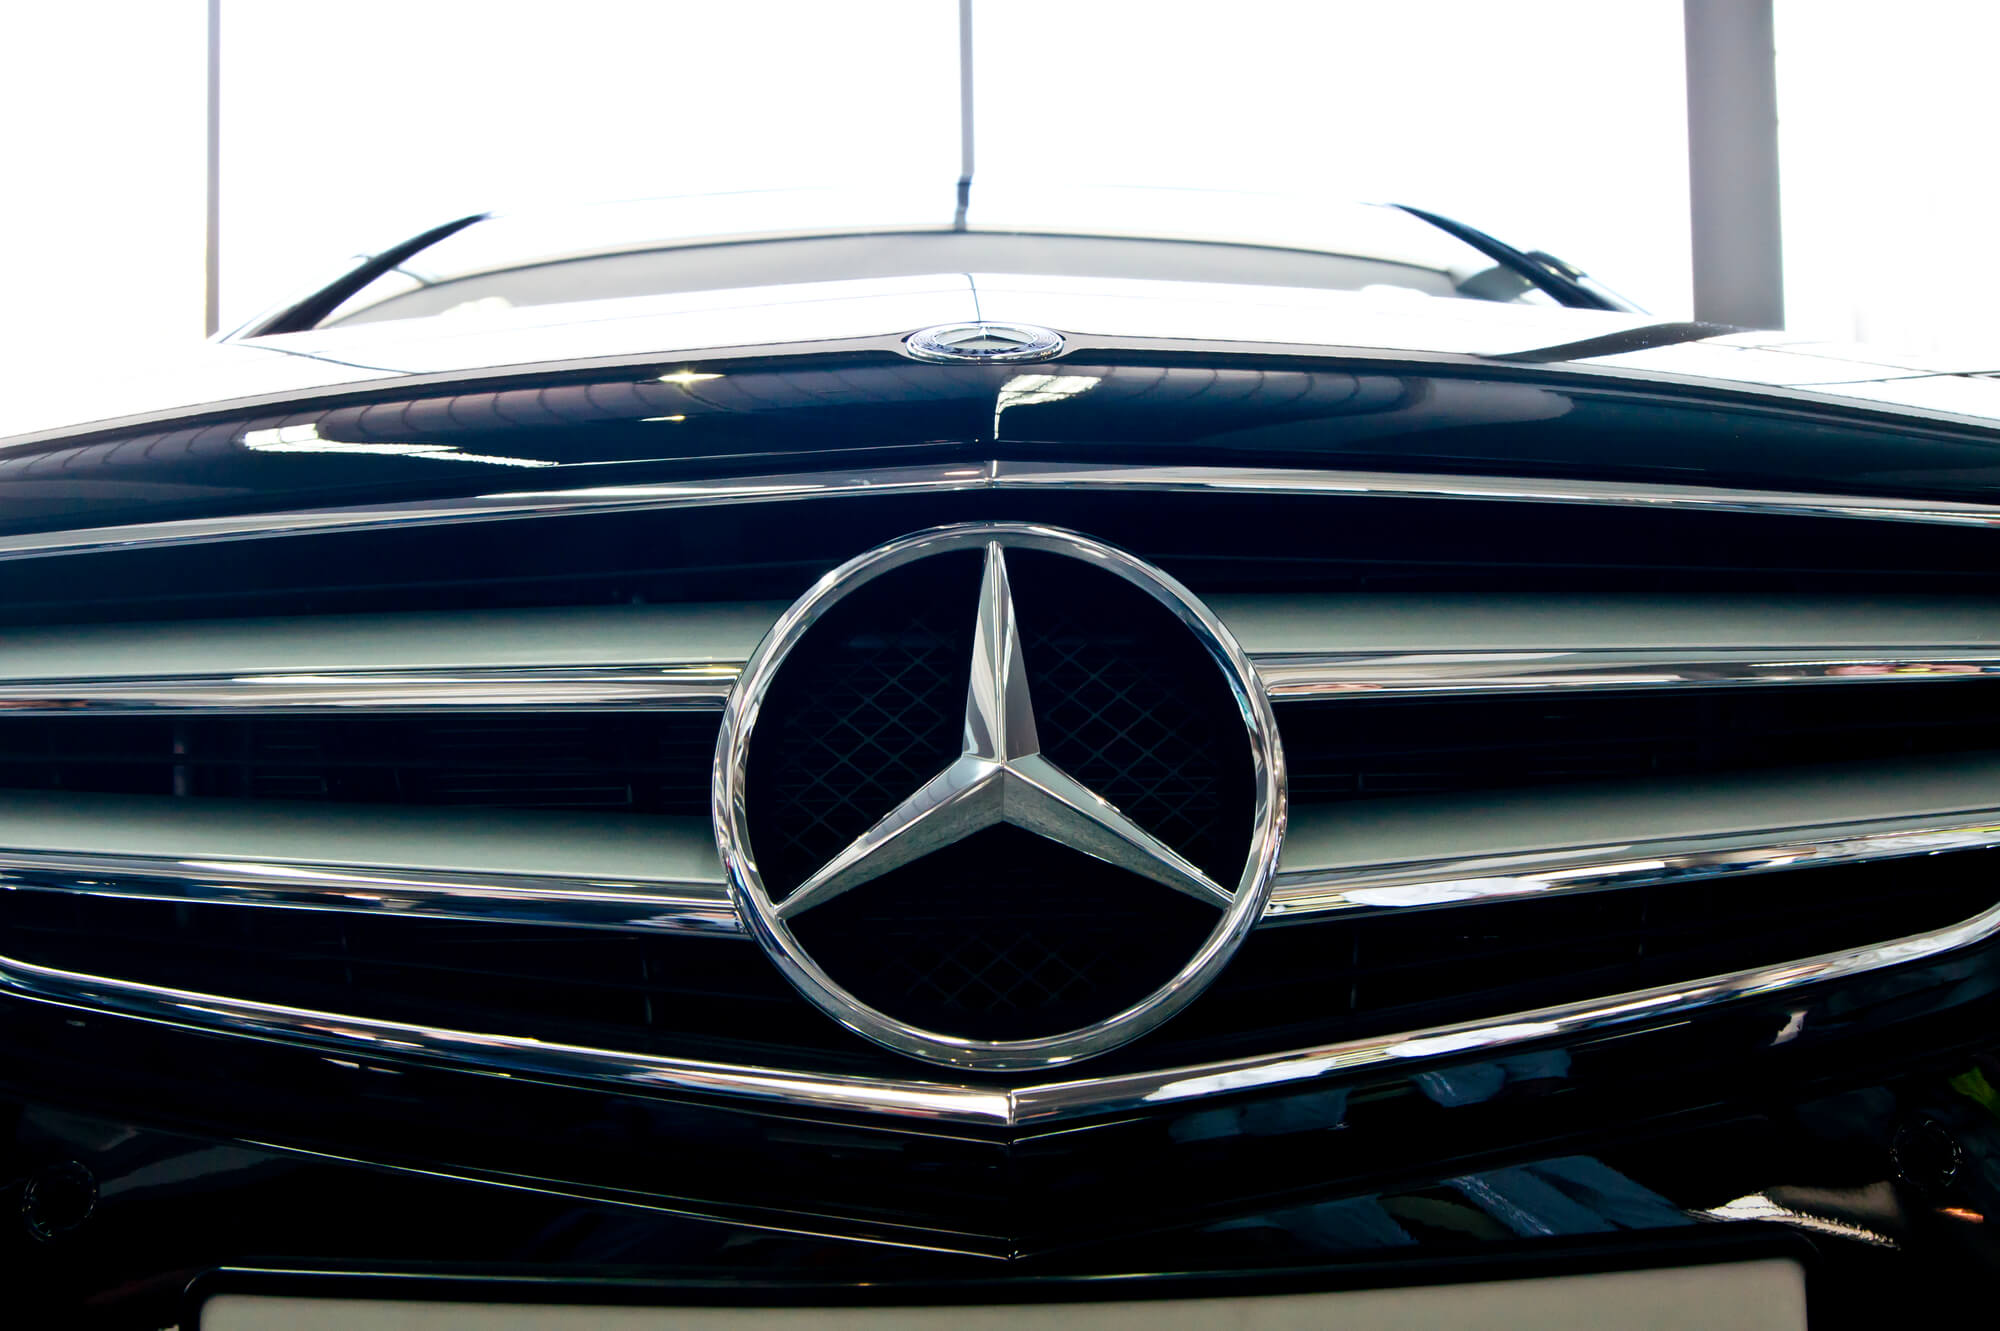 A high-end luxury car in need of Mercedes Repair in Davie FL